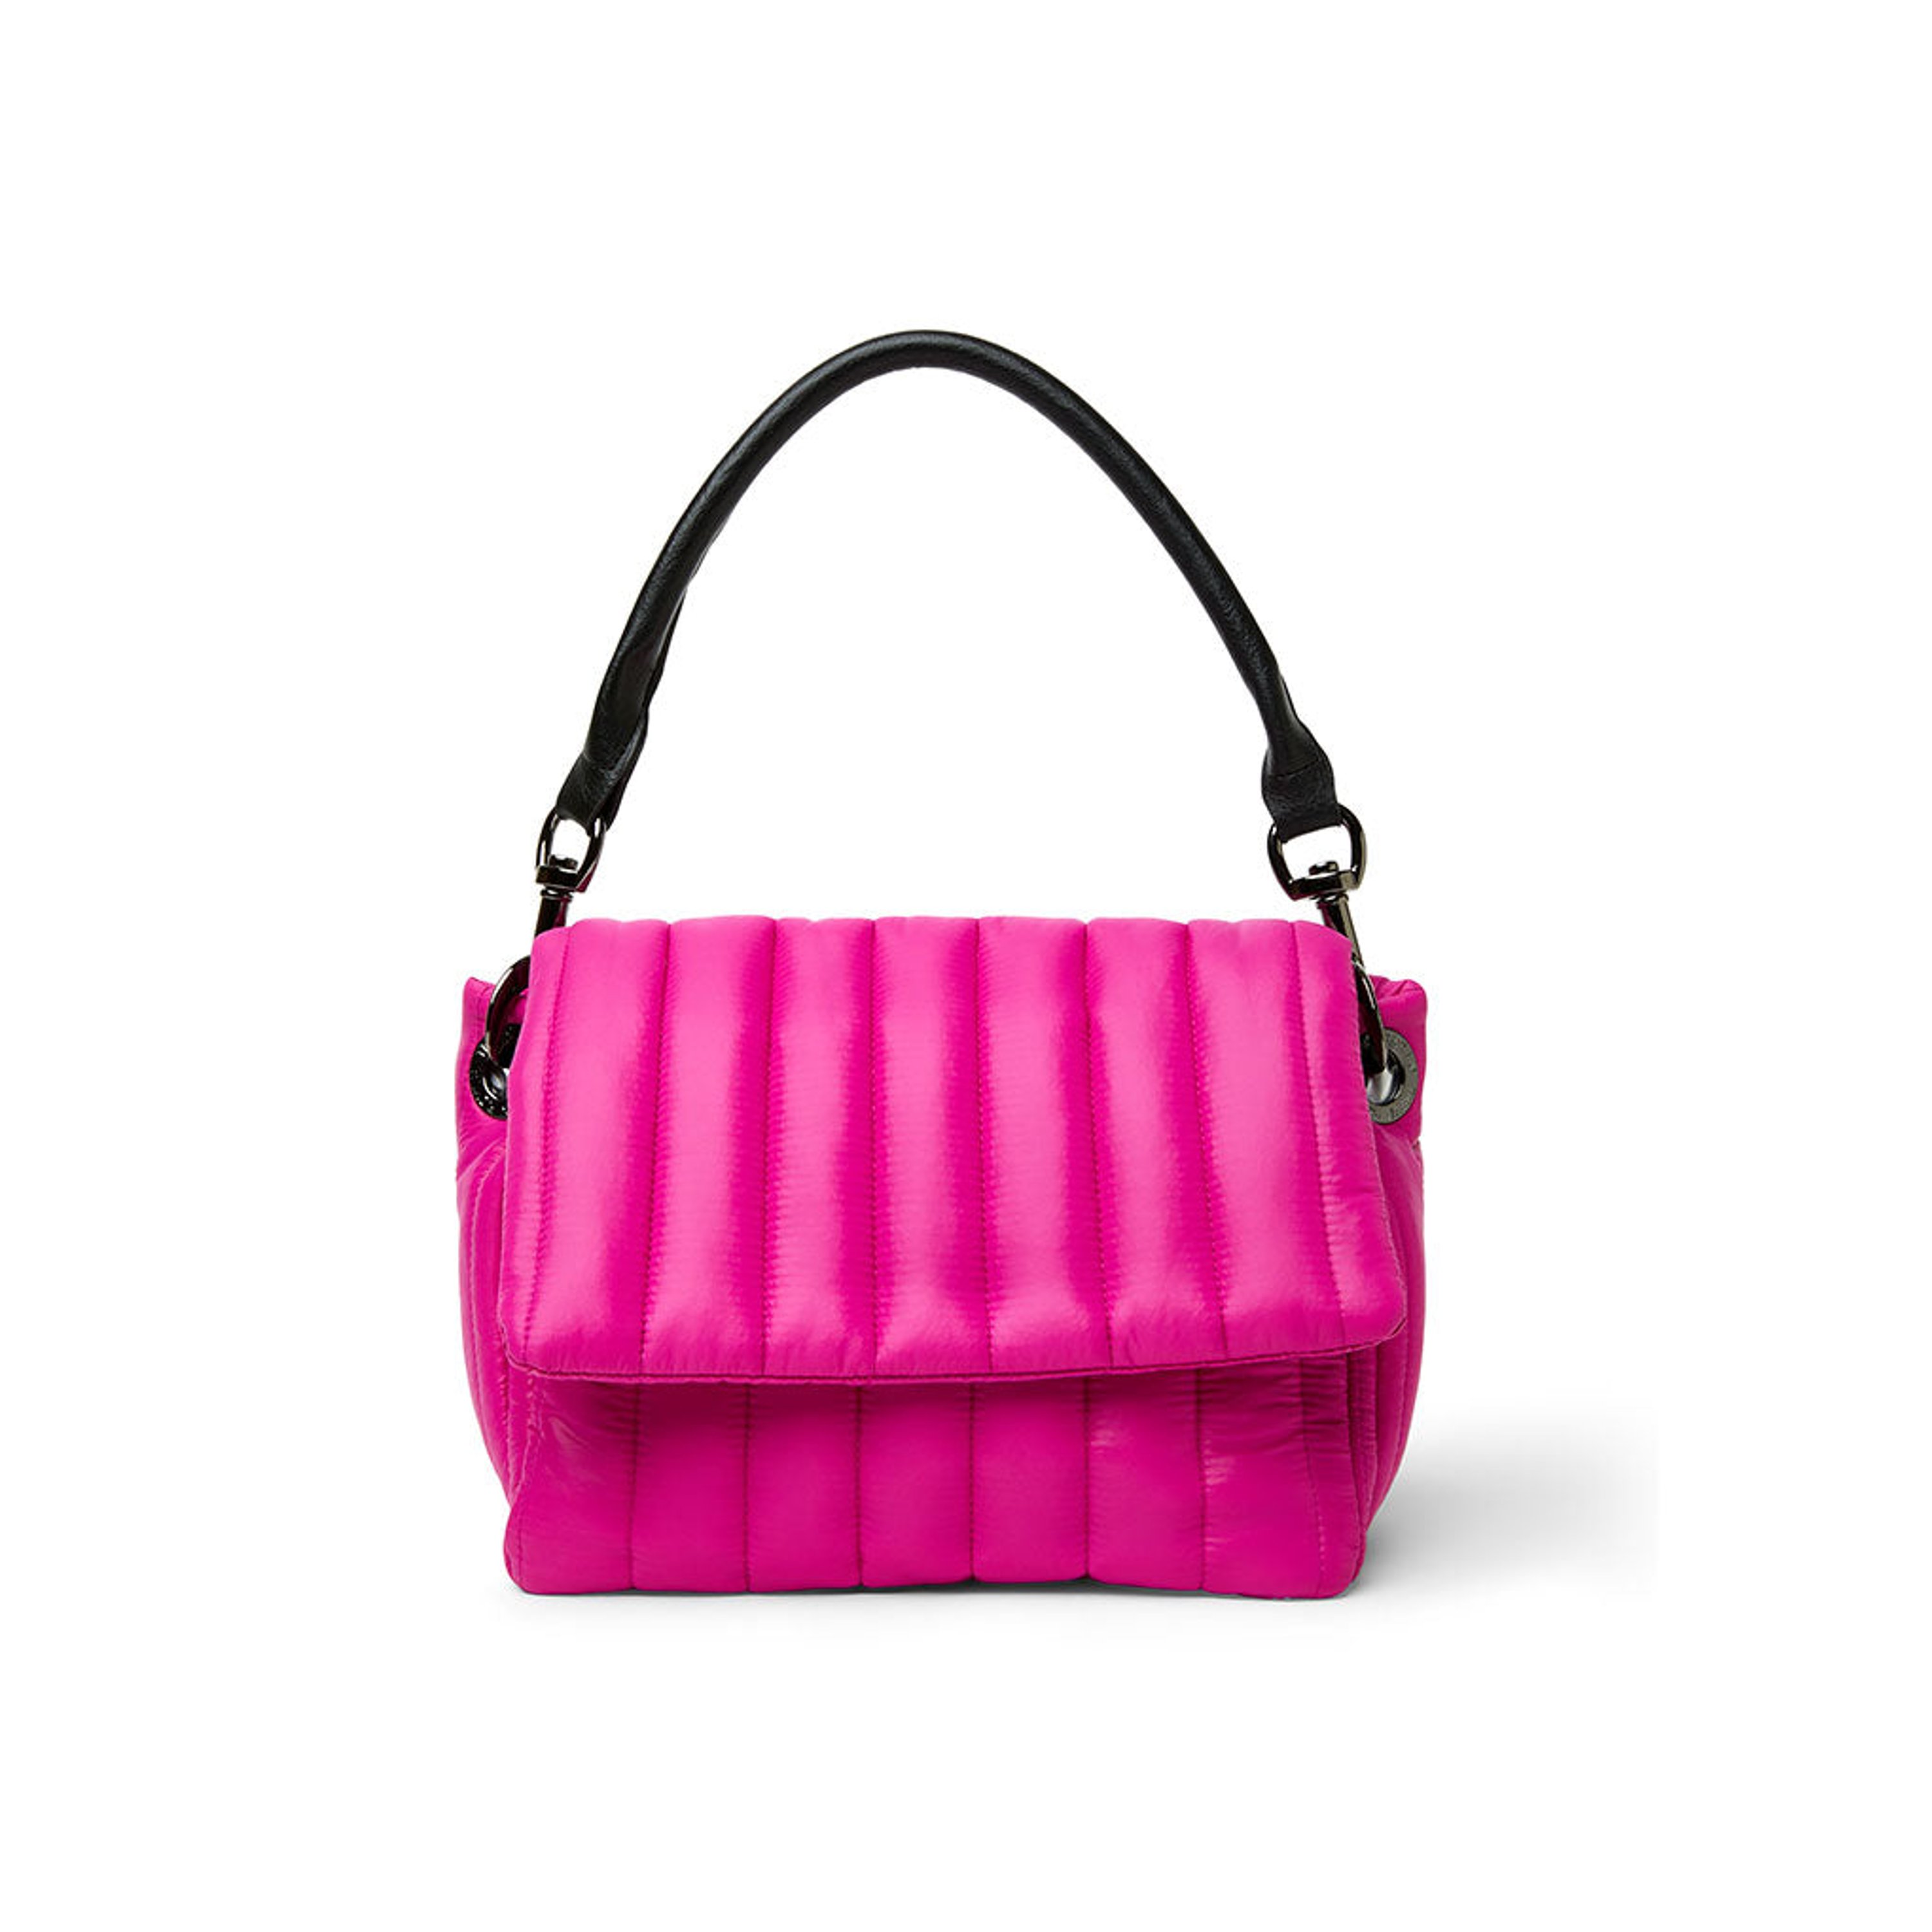 Think Royln Bar Bag In Pink